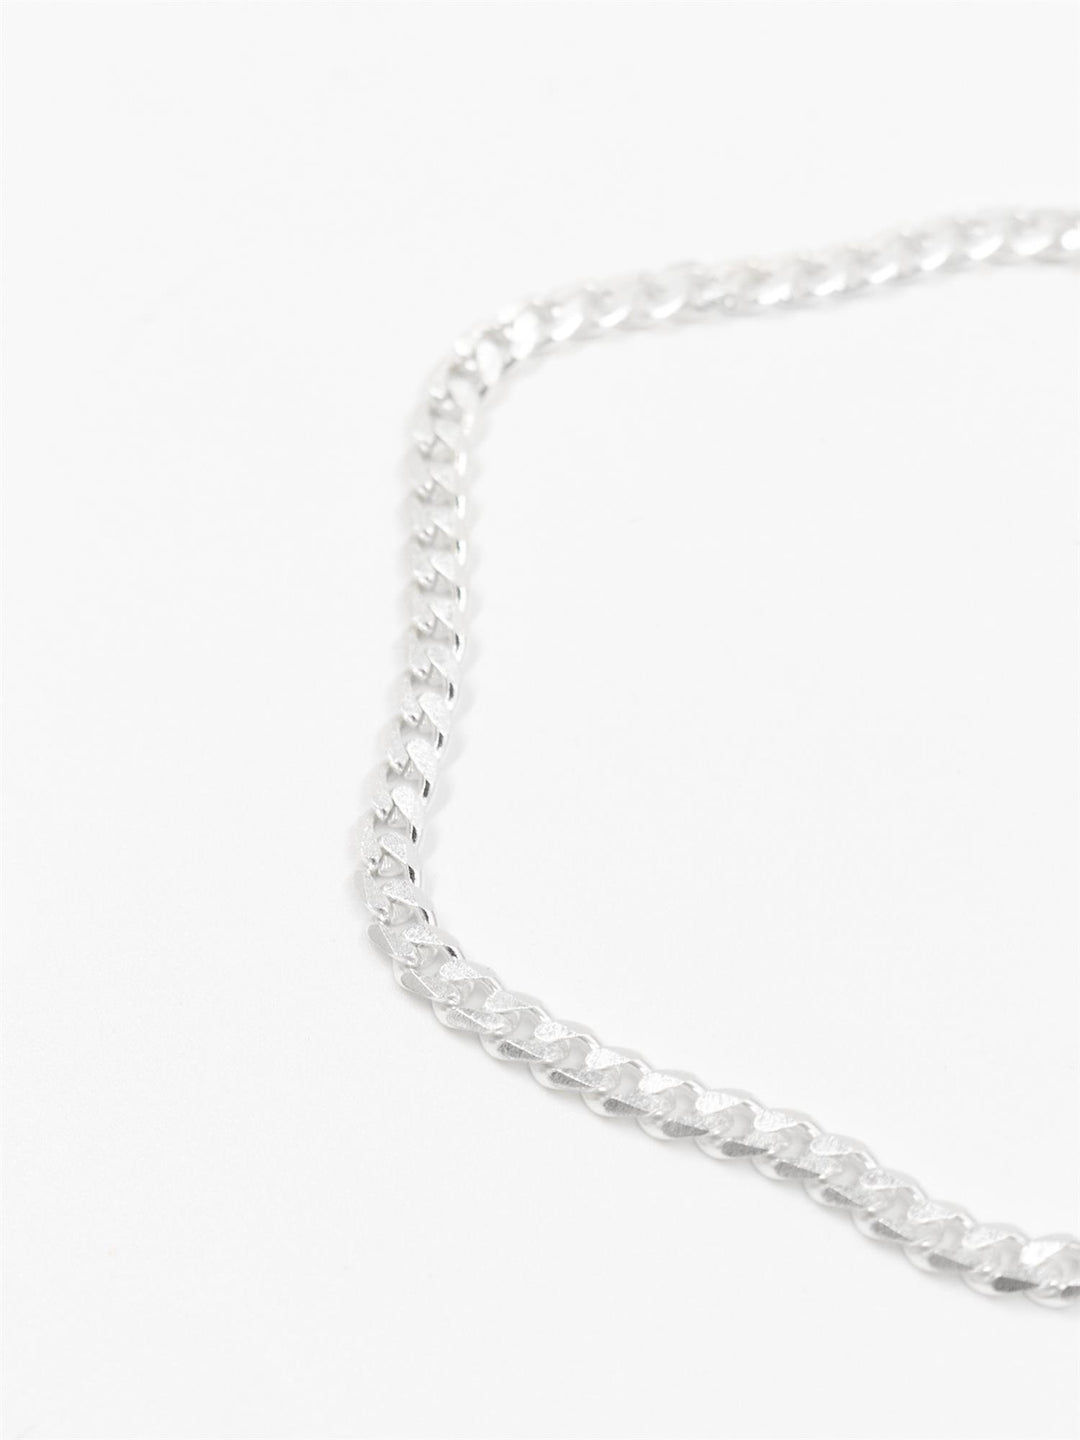 Petite Cuban Chain Silver - 46 cm